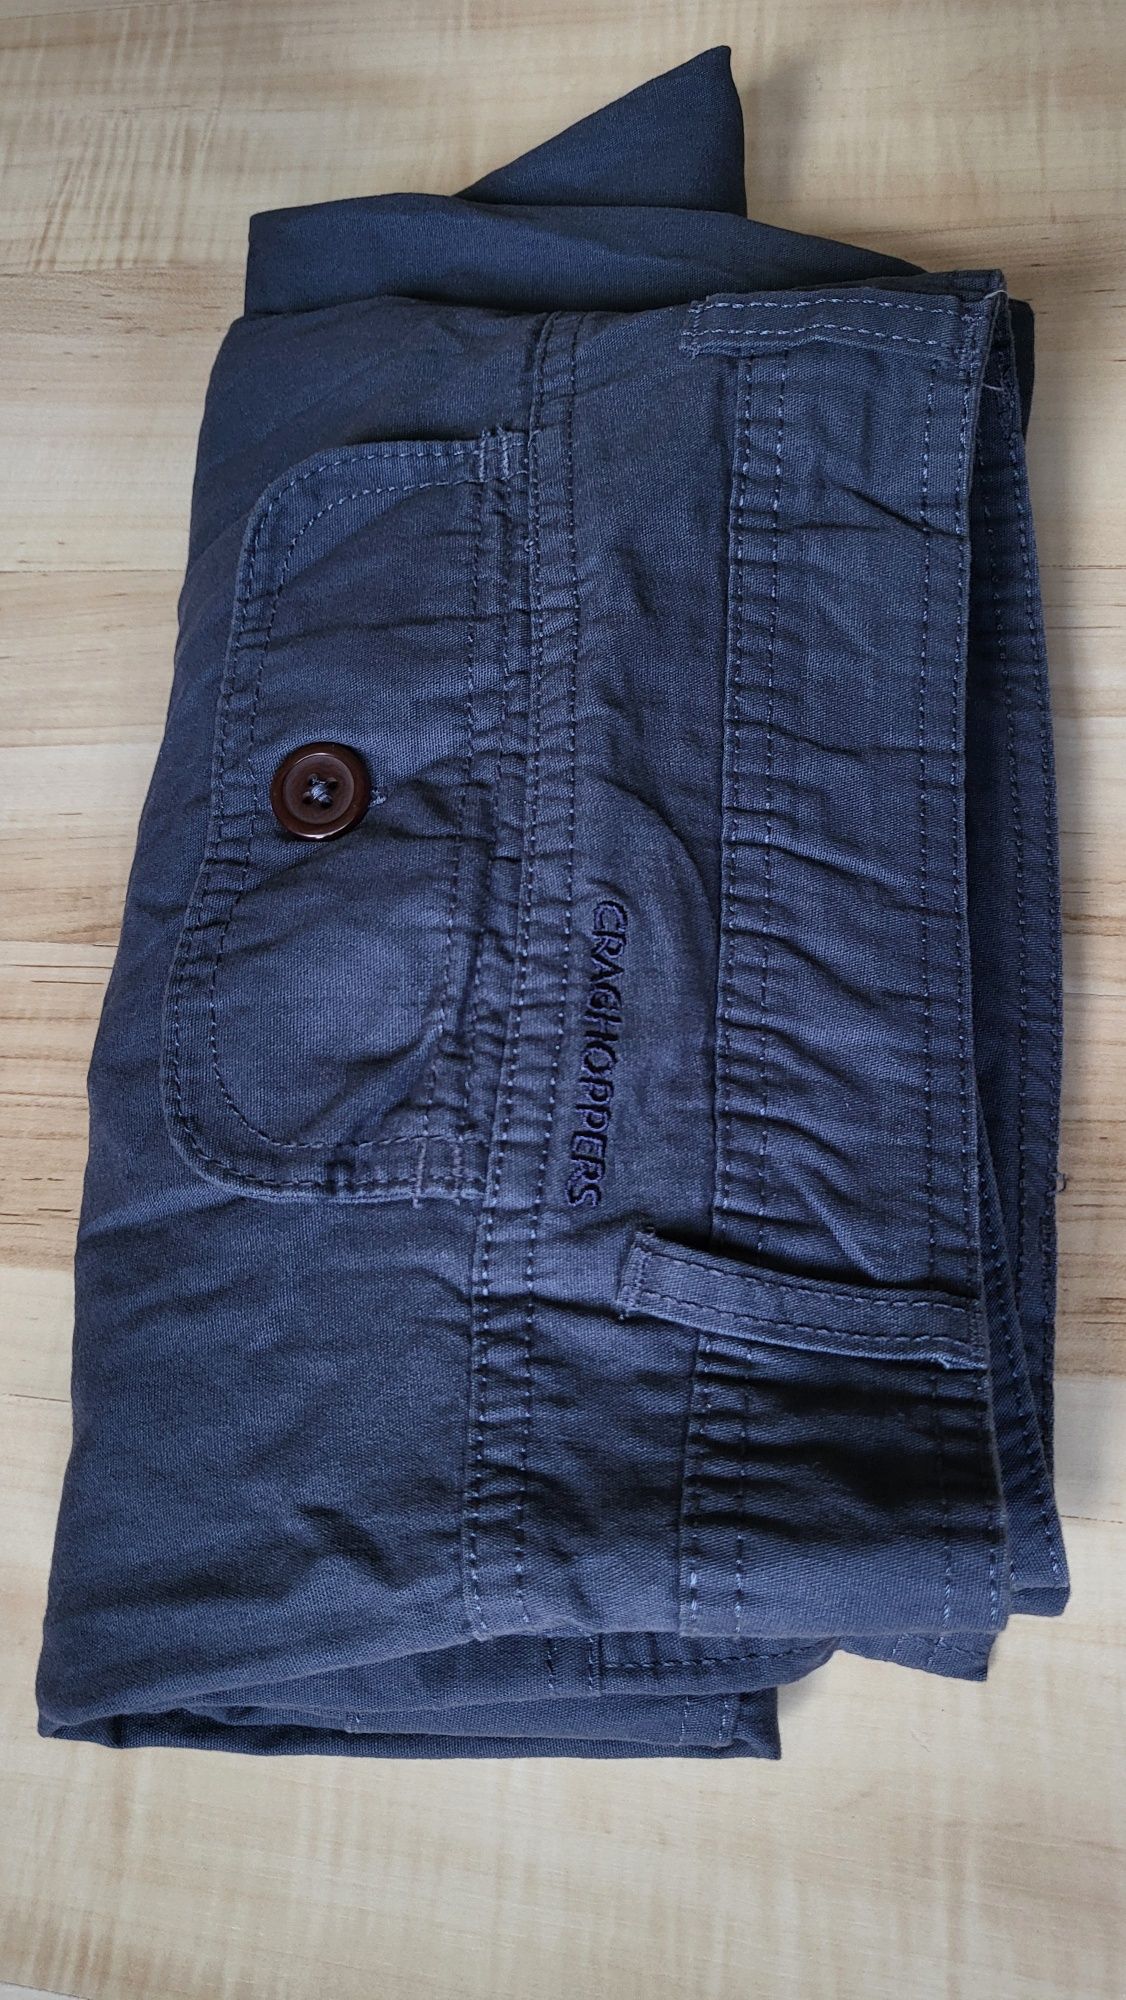 Craghoppers Spodenki shorts L len Orginal 100%komfort organic bawełna